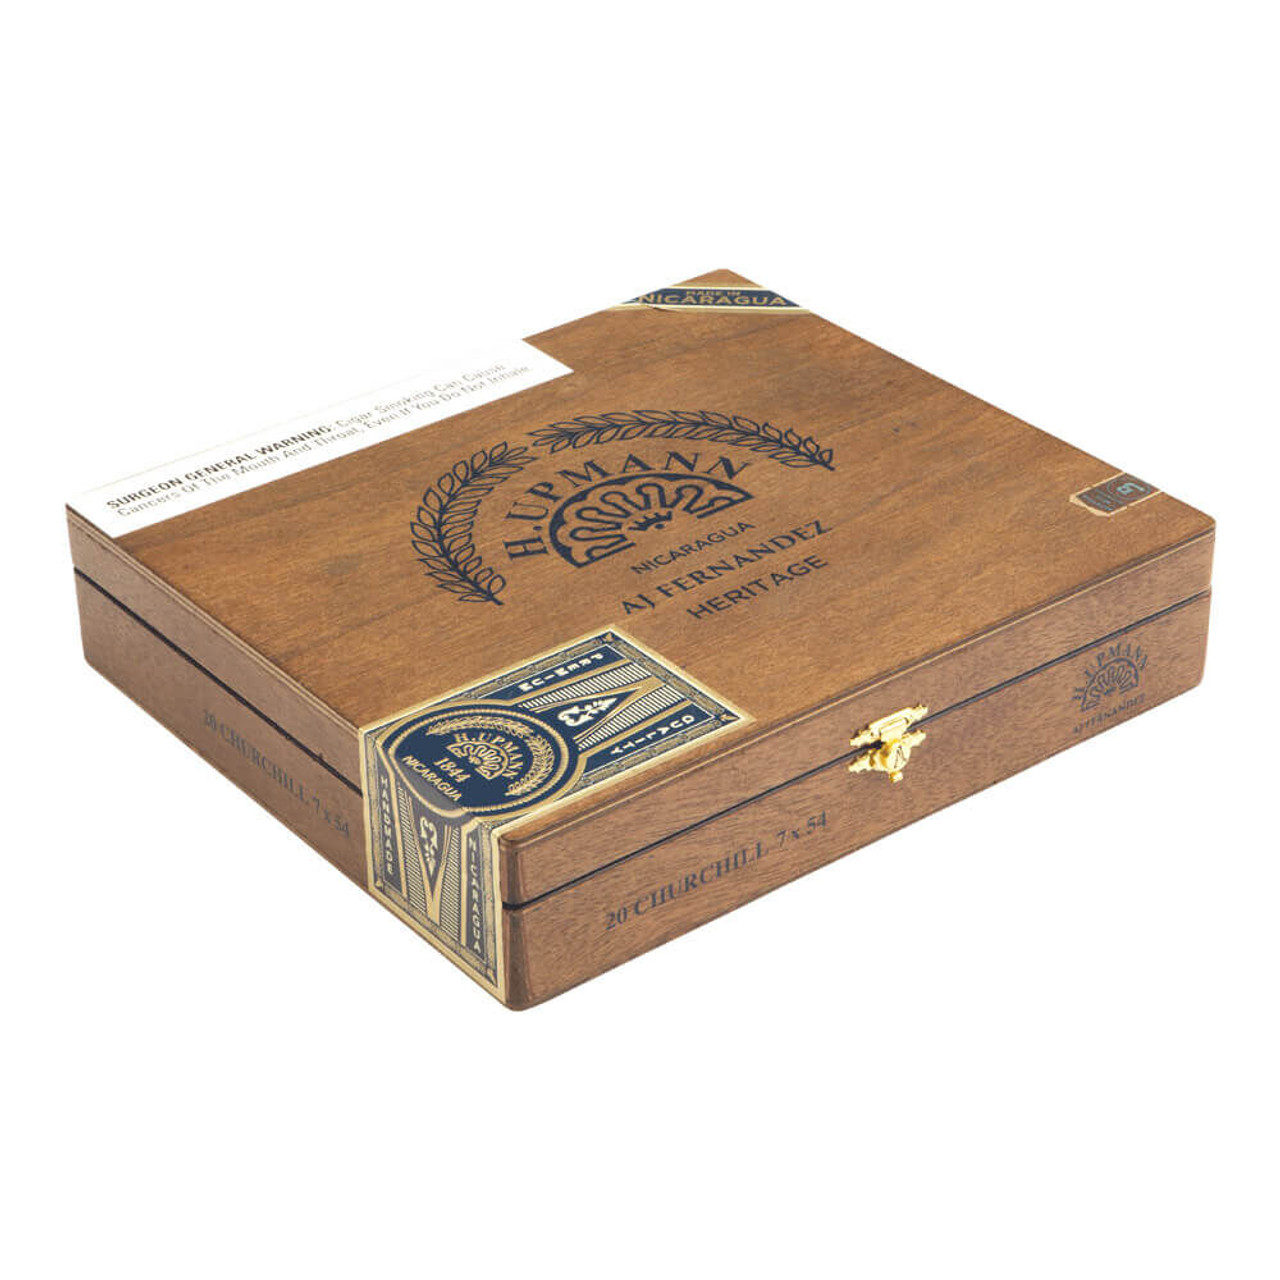 H. Upmann Nicaragua Heritage by AJ Fernandez Churchill Cigars - 7 x 54 (Box of 20) *Box